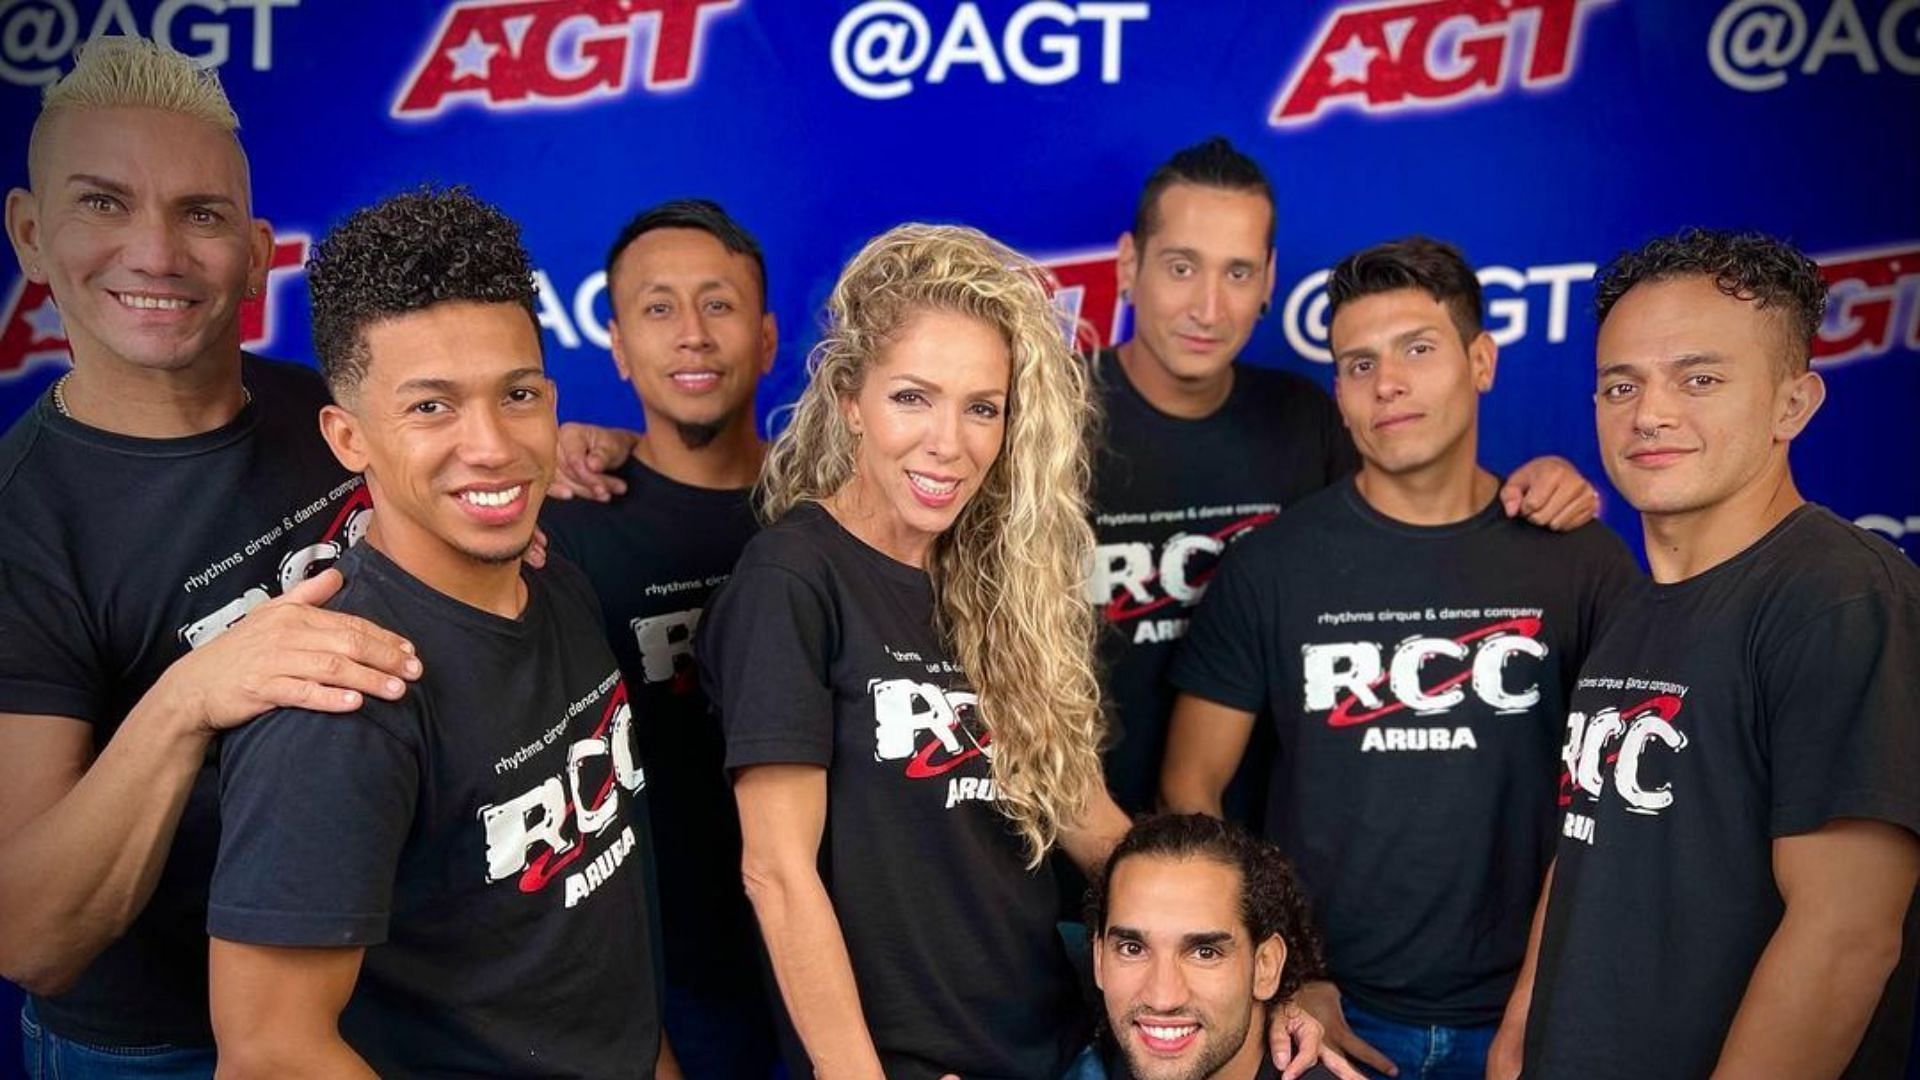 AGT circus group RCC Aruba impressed judges with their audition (Image via rccaruba/Instagram)